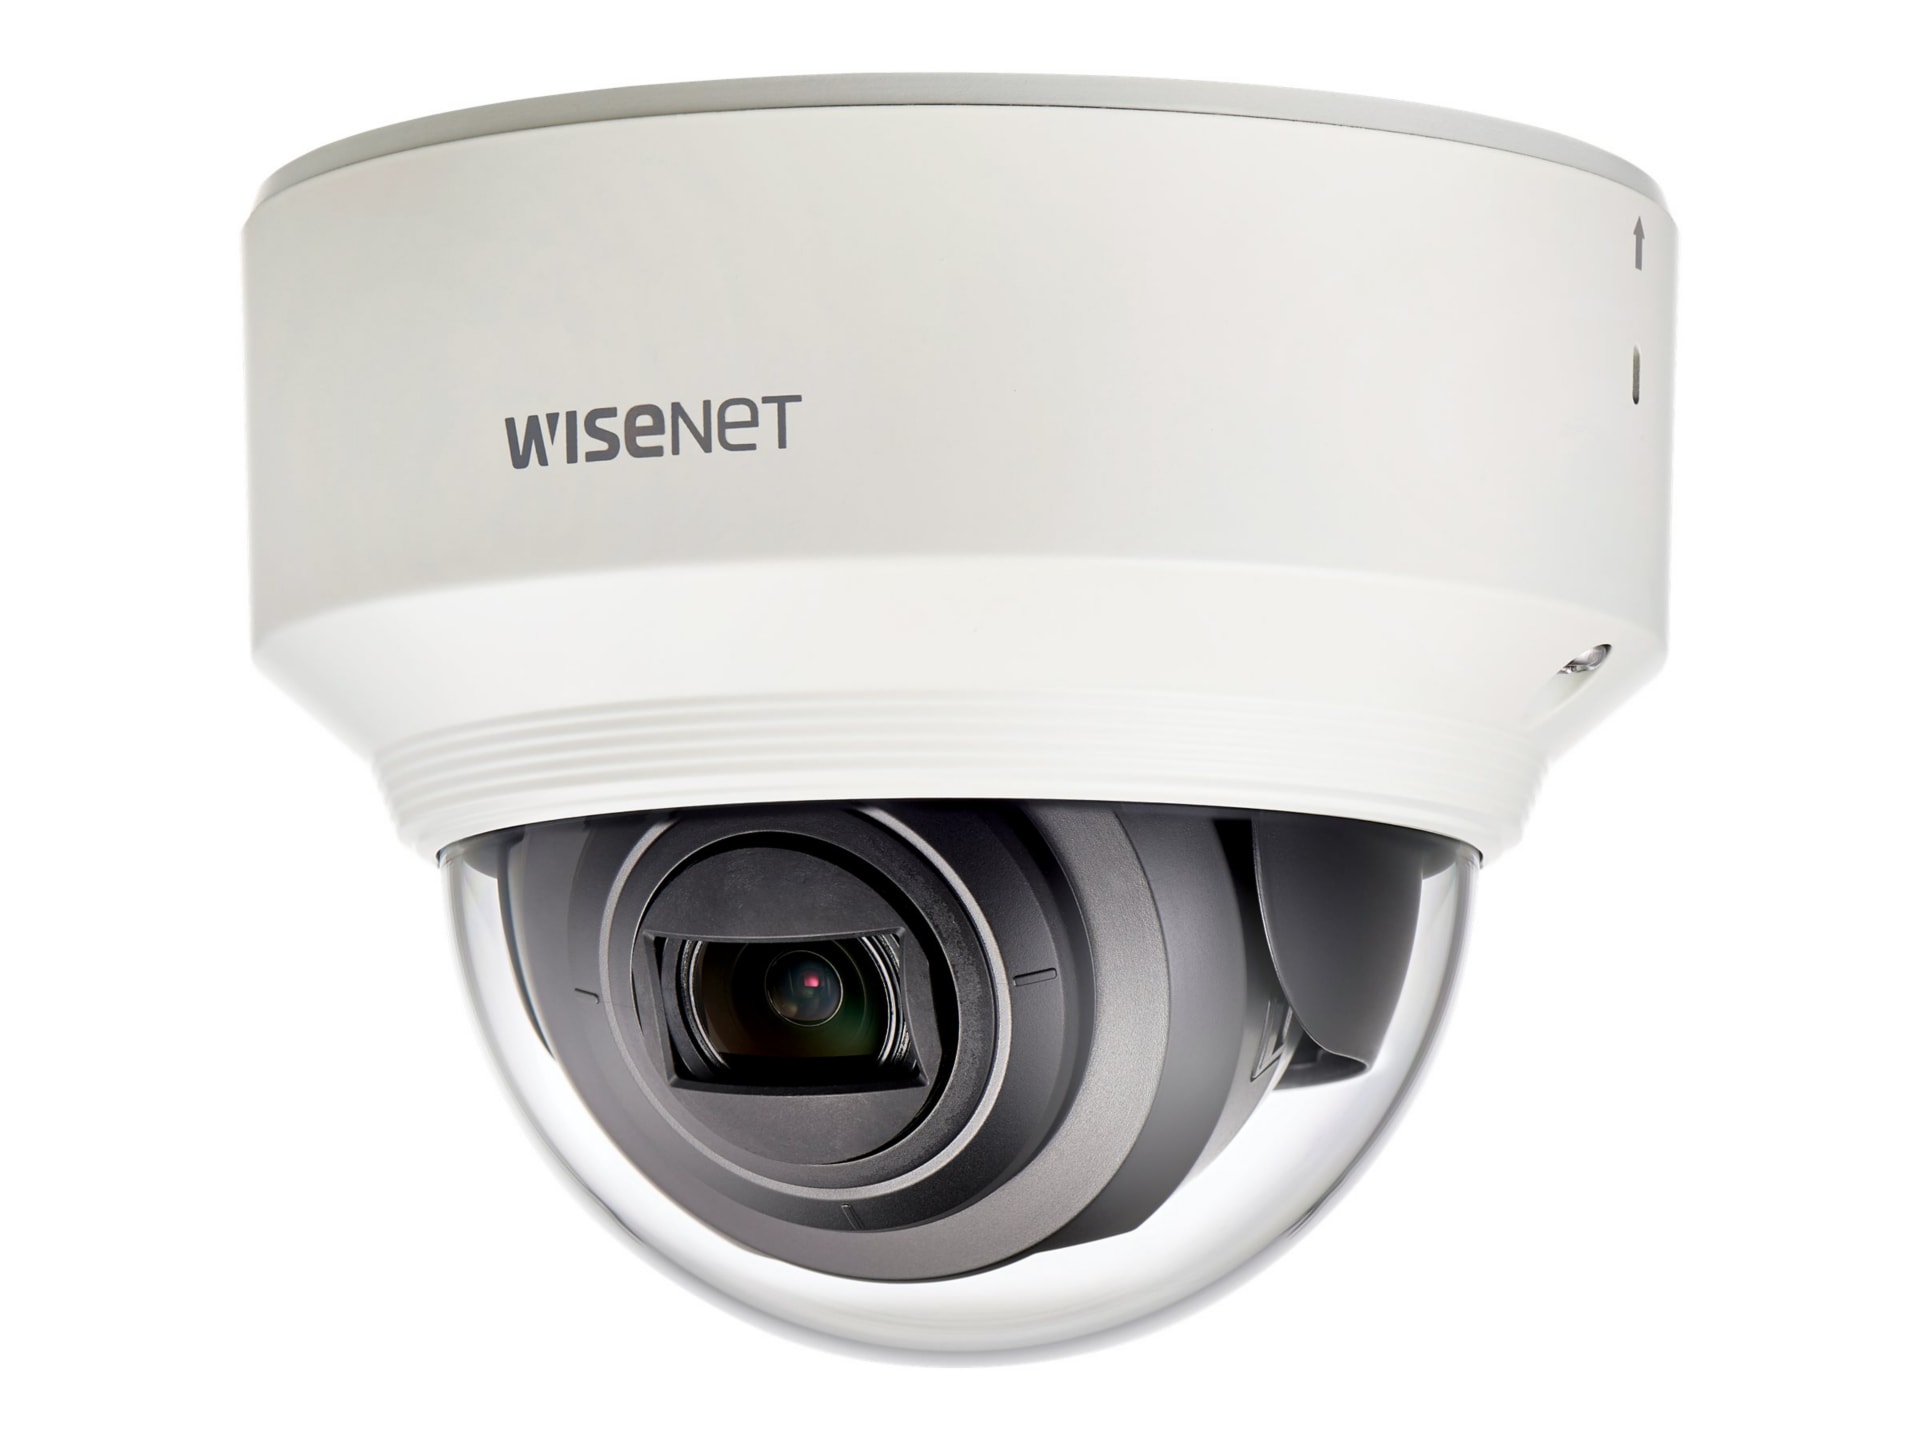 Samsung WiseNet X XND-6080V - network surveillance camera